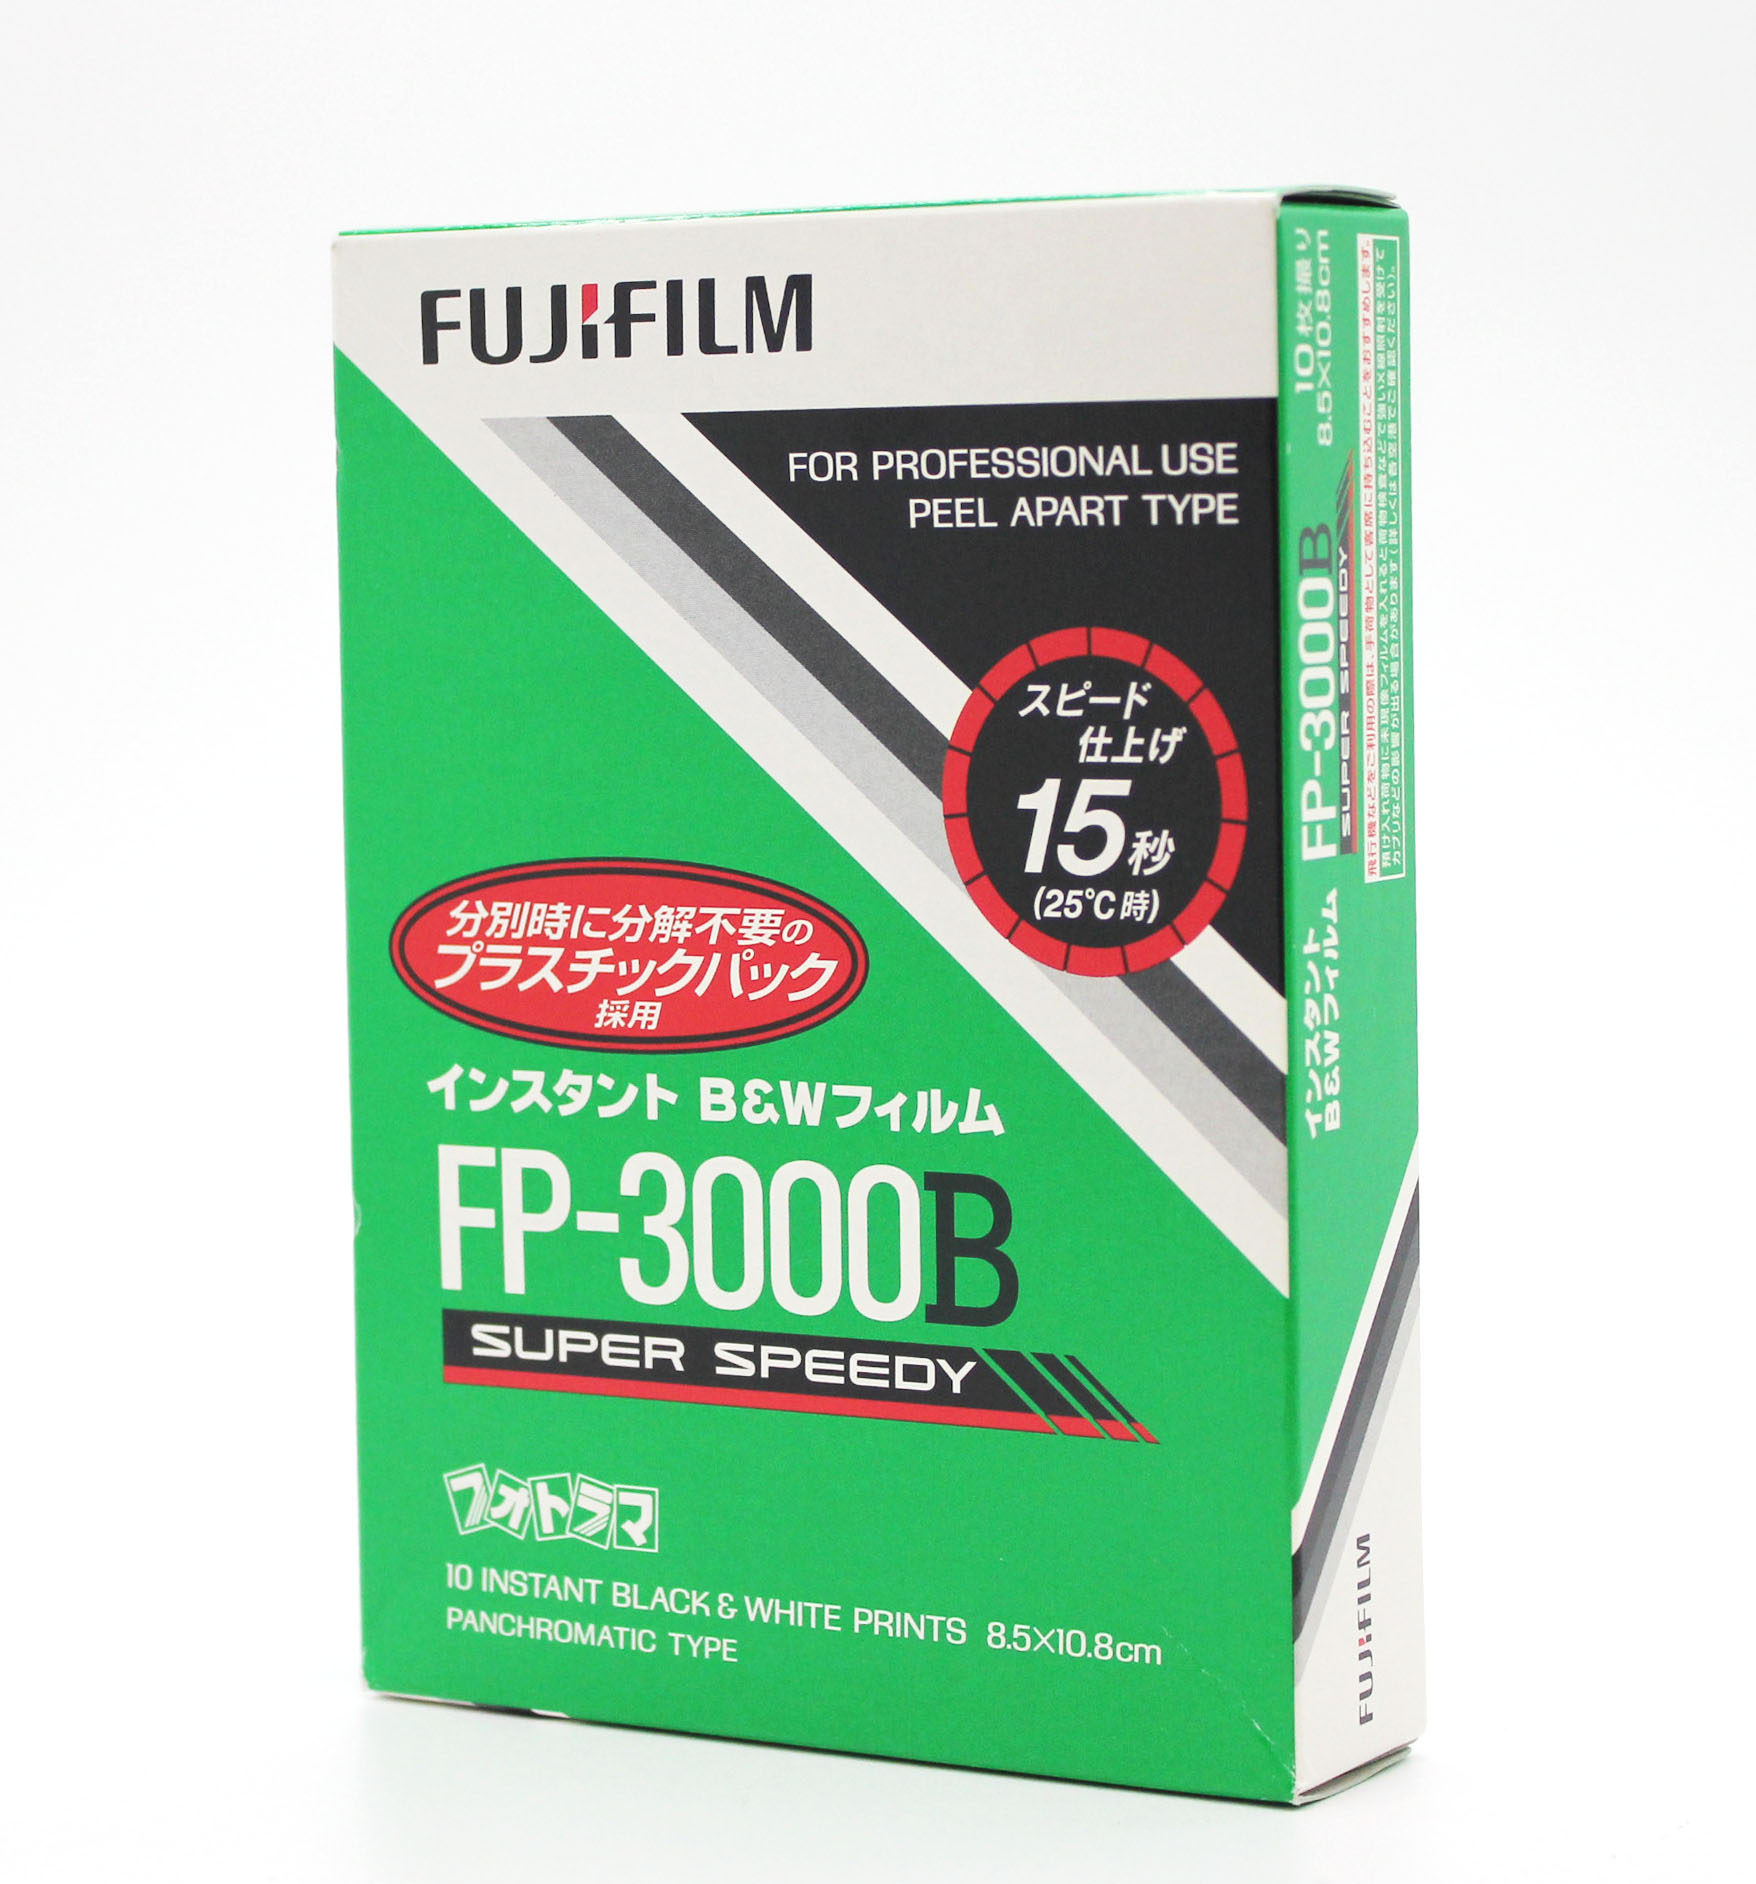 [New] Fuji Fujifilm FP-3000B 8.5x10.8cm Instant Black & White Film (Expired 09/2013) from Japan